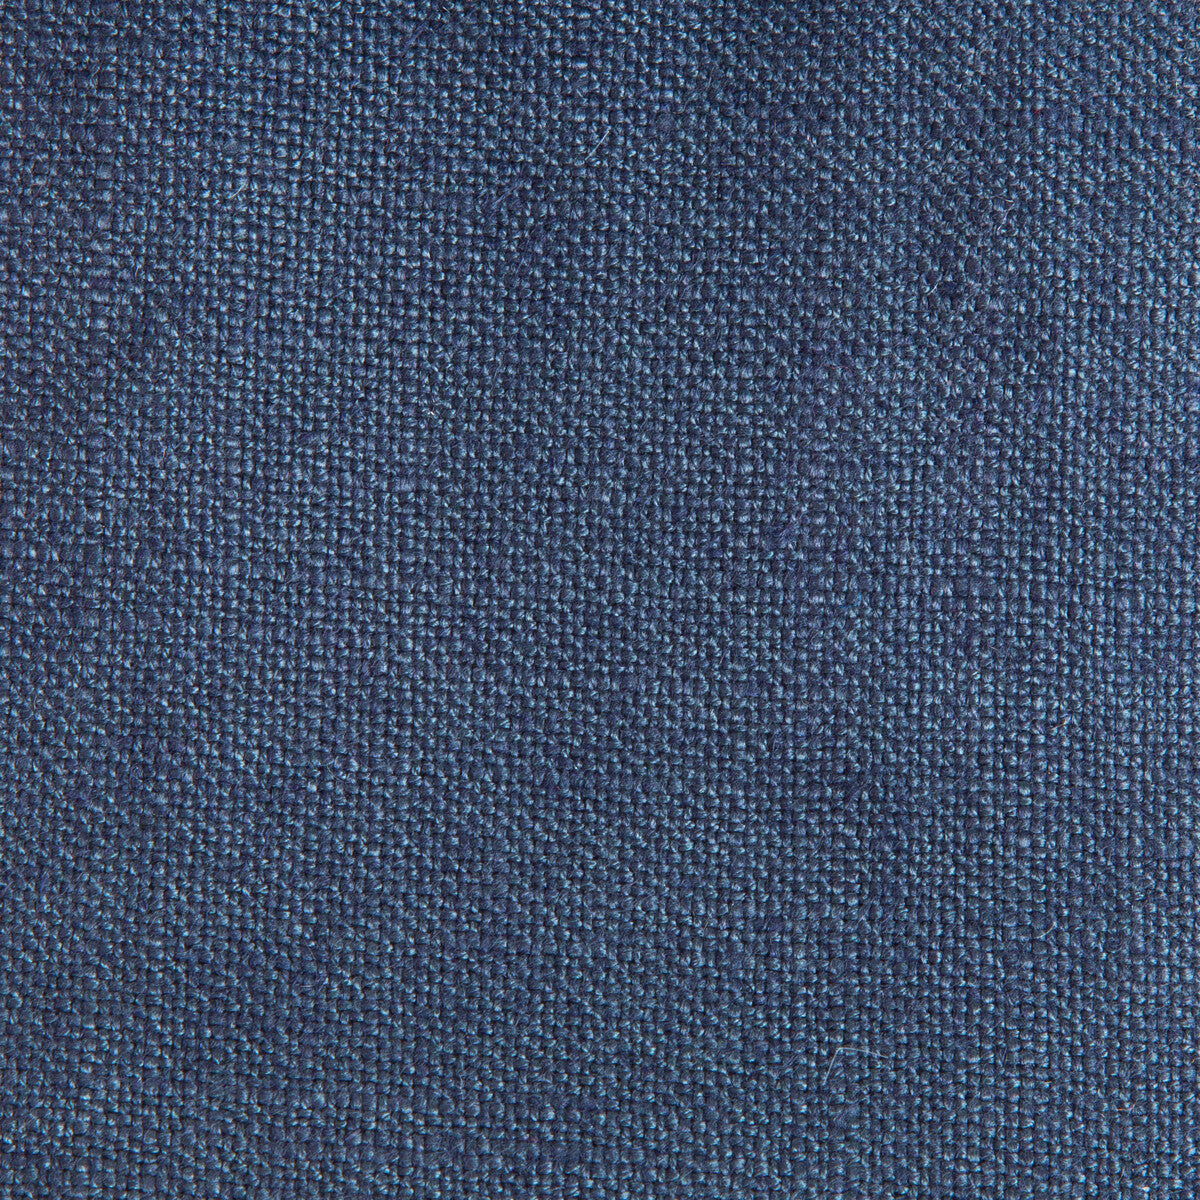 Peru fabric in azul anil color - pattern GDT5548.017.0 - by Gaston y Daniela in the Gaston Nuevo Mundo collection